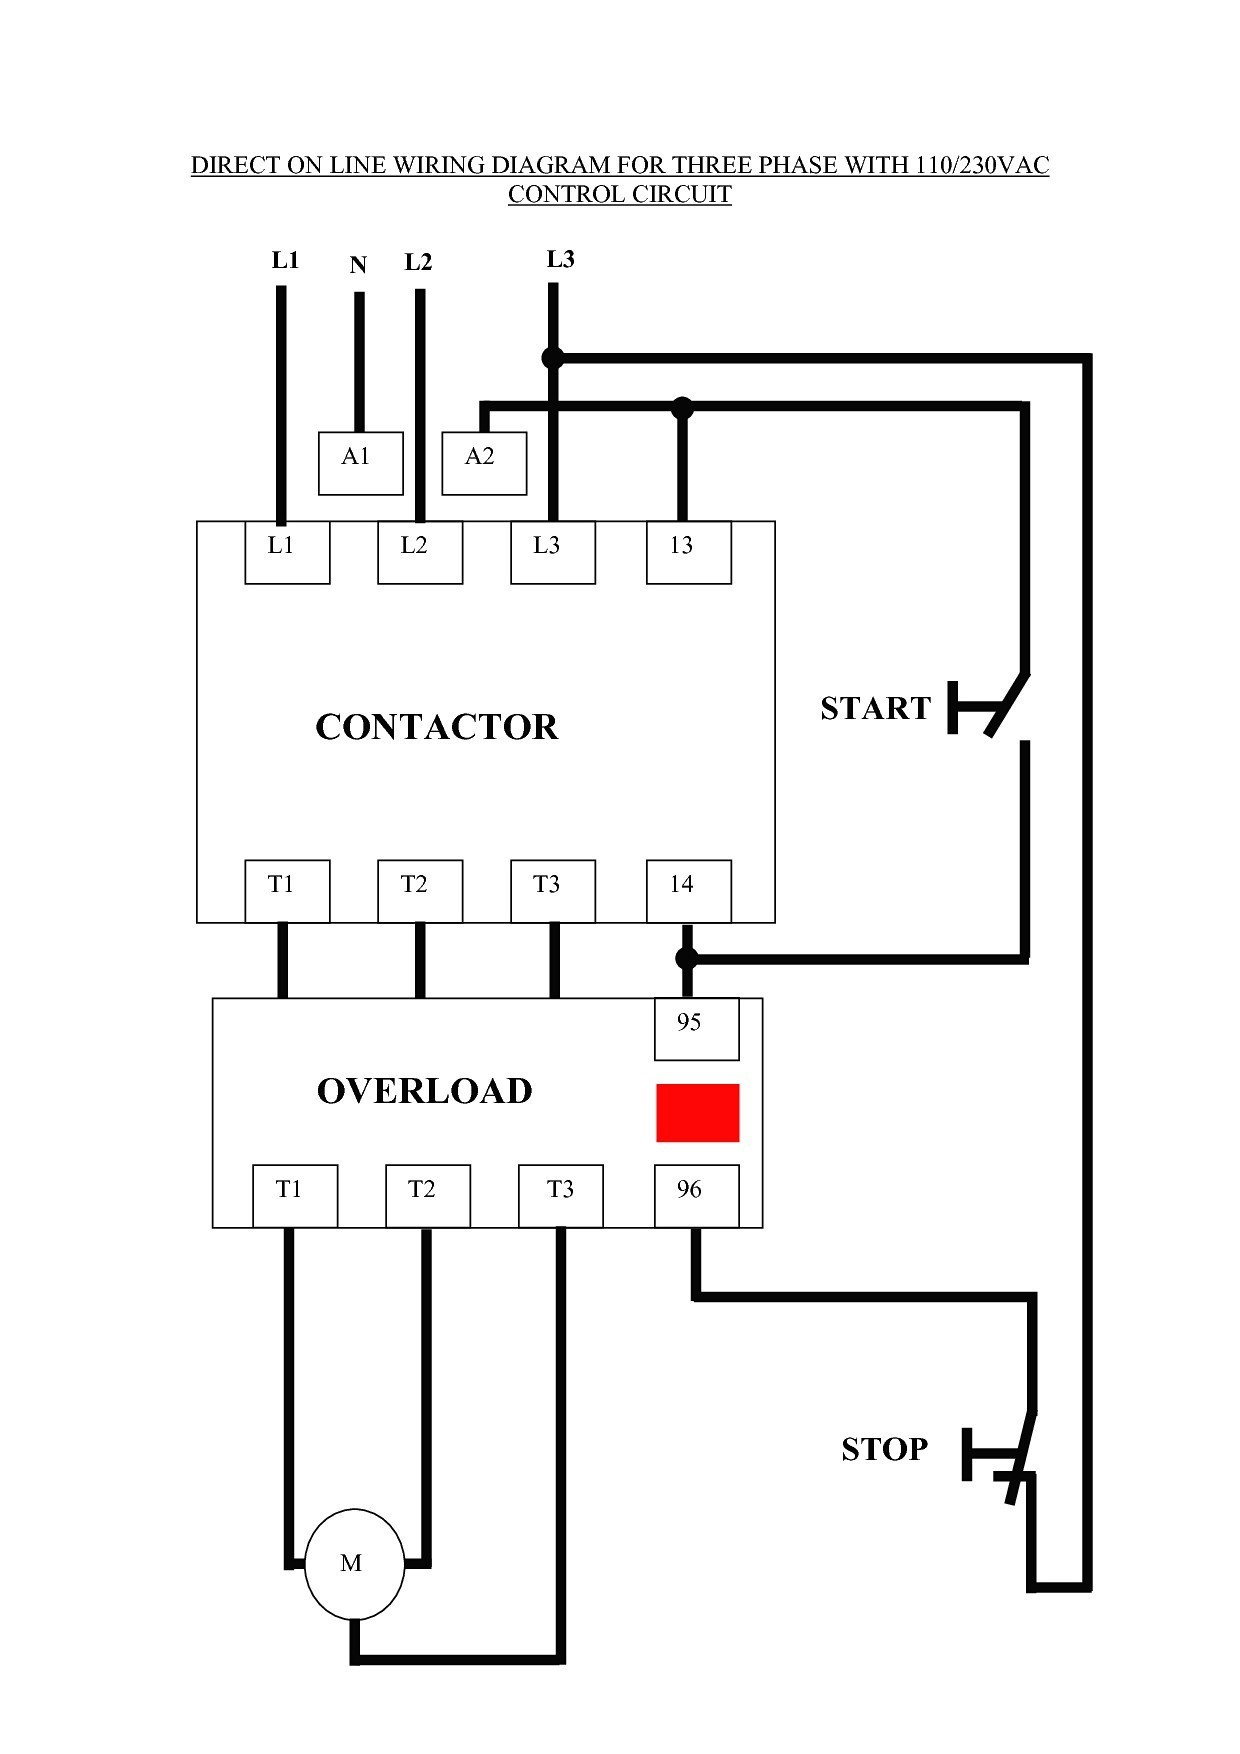 Square D 8903 Lighting Contactor Wiring Diagram - Wiring Diagram